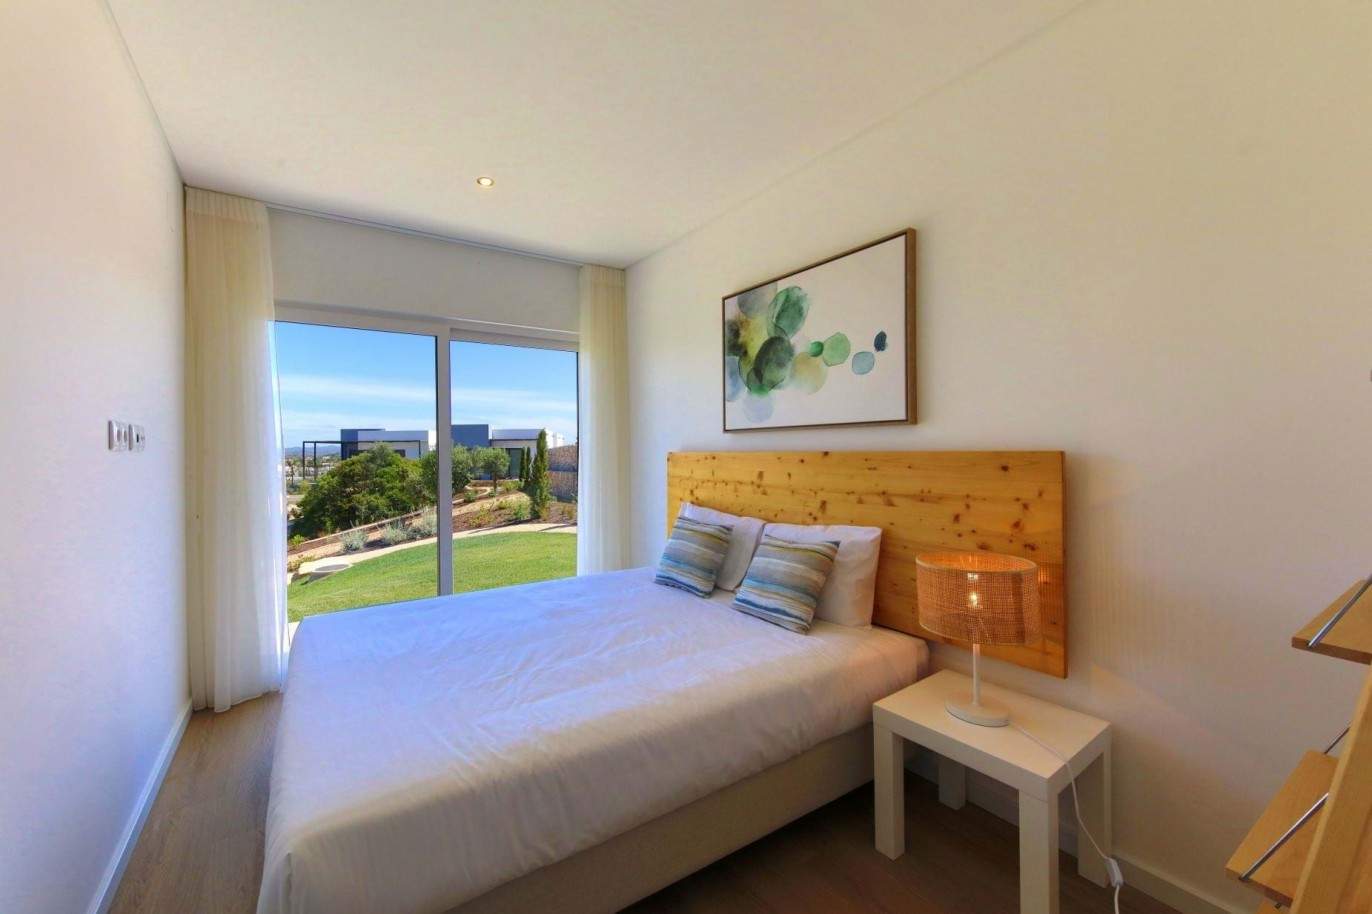 2+1 Bedroom Villa in resort, for sale in Carvoeiro, Algarve, Portugal_204790